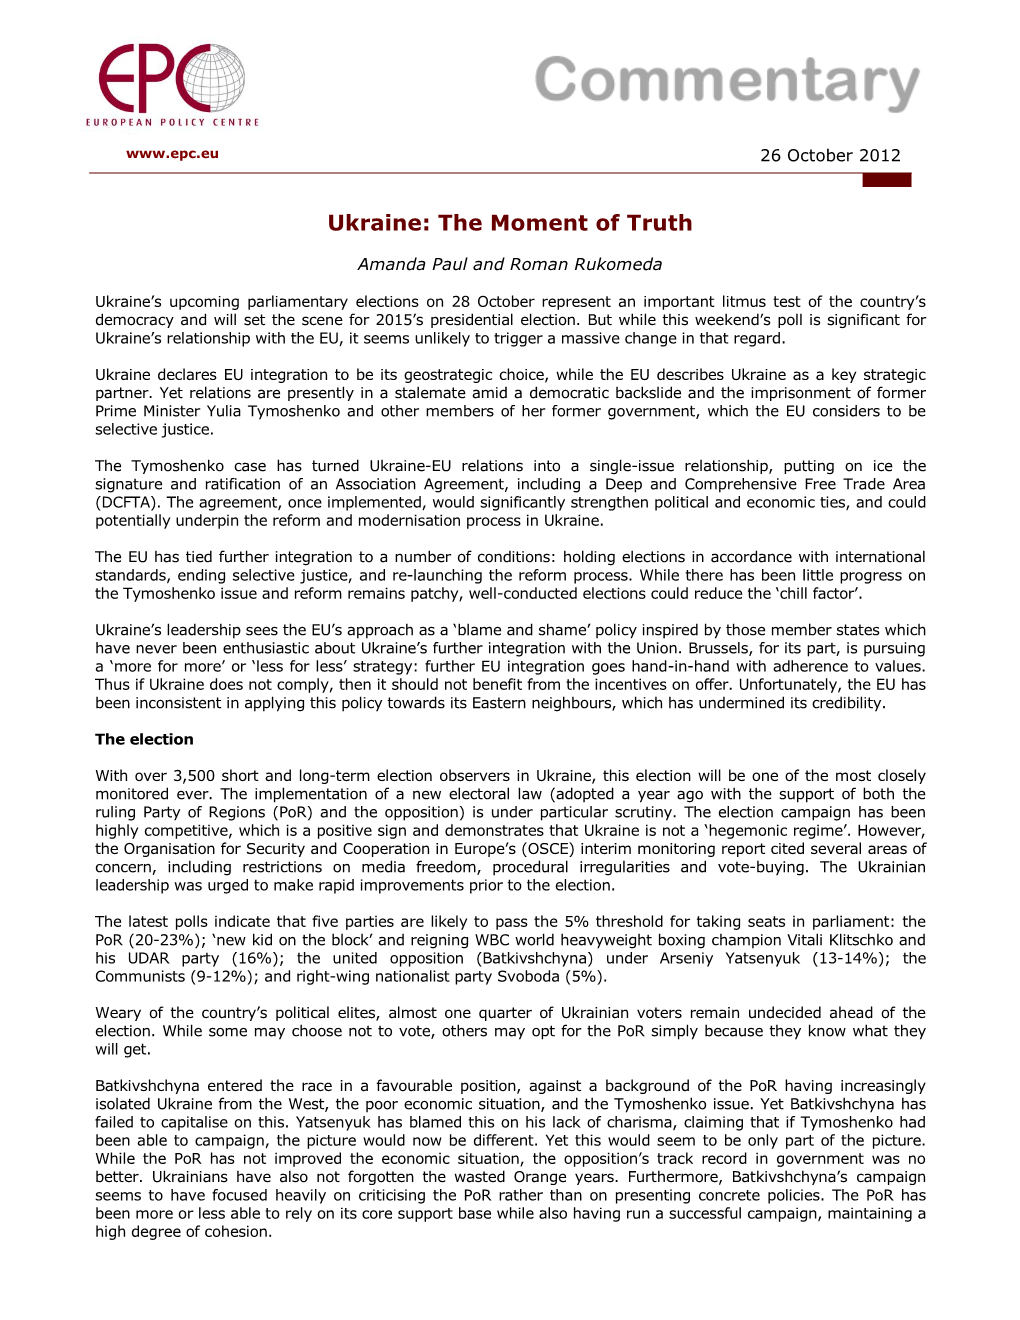 Ukraine: the Moment of Truth